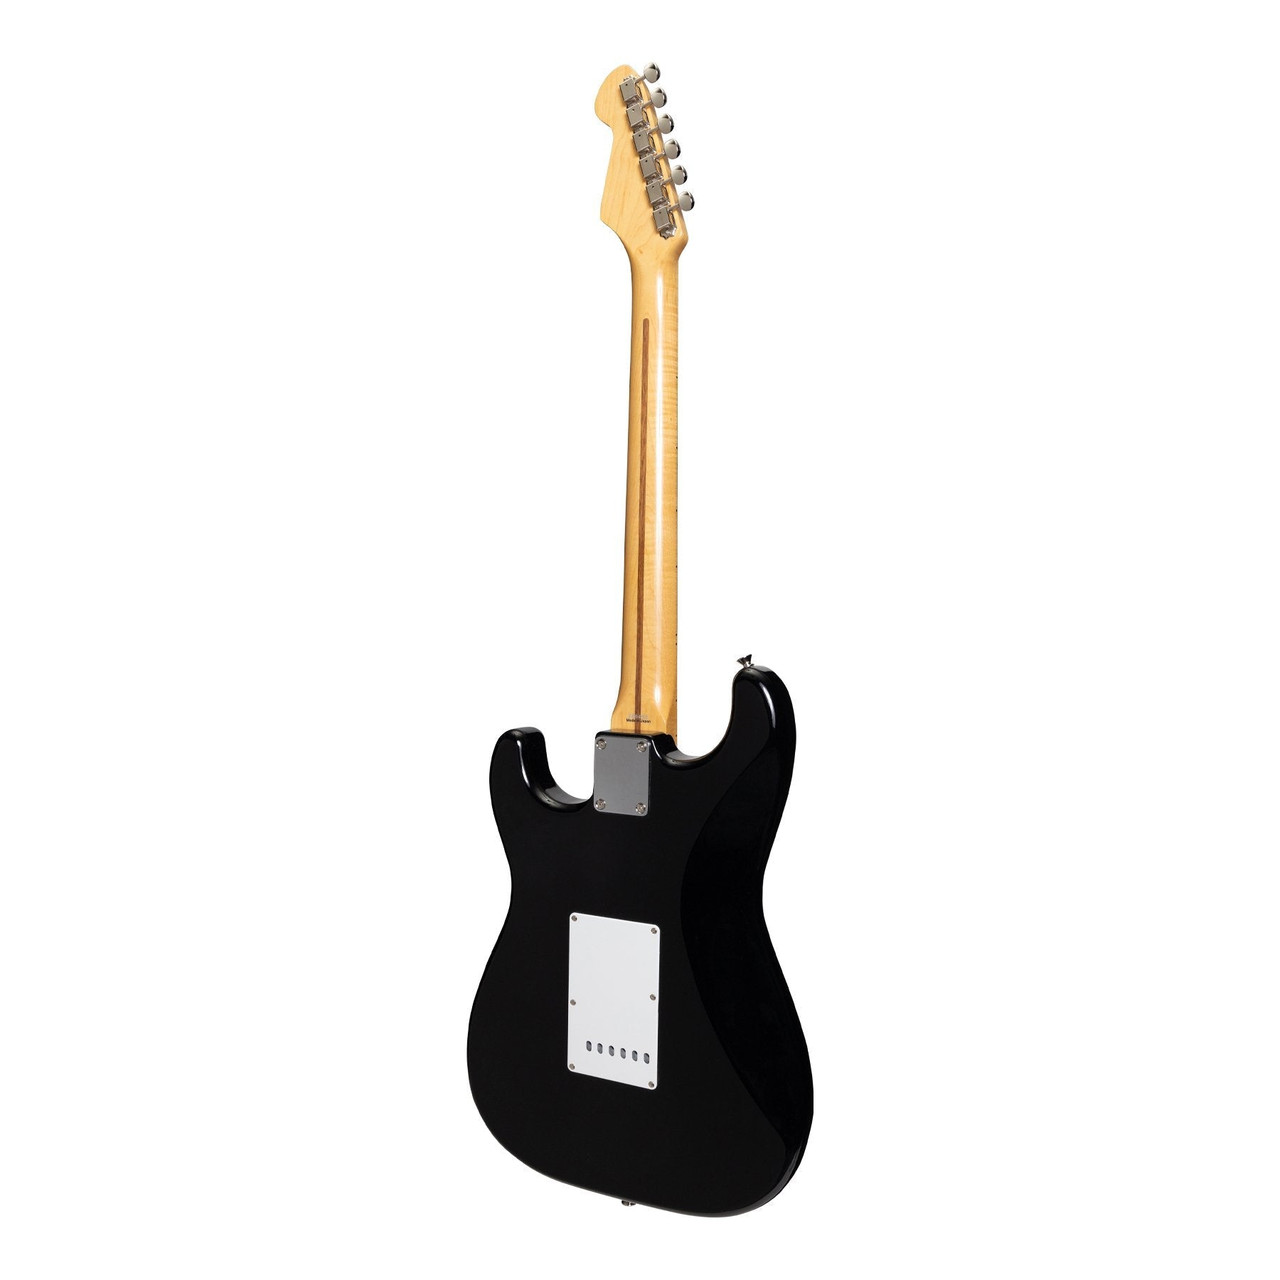 Tokai 'Vintage Series' AST-95 ST-Style Electric Guitar (Black/Maple Fretboard)